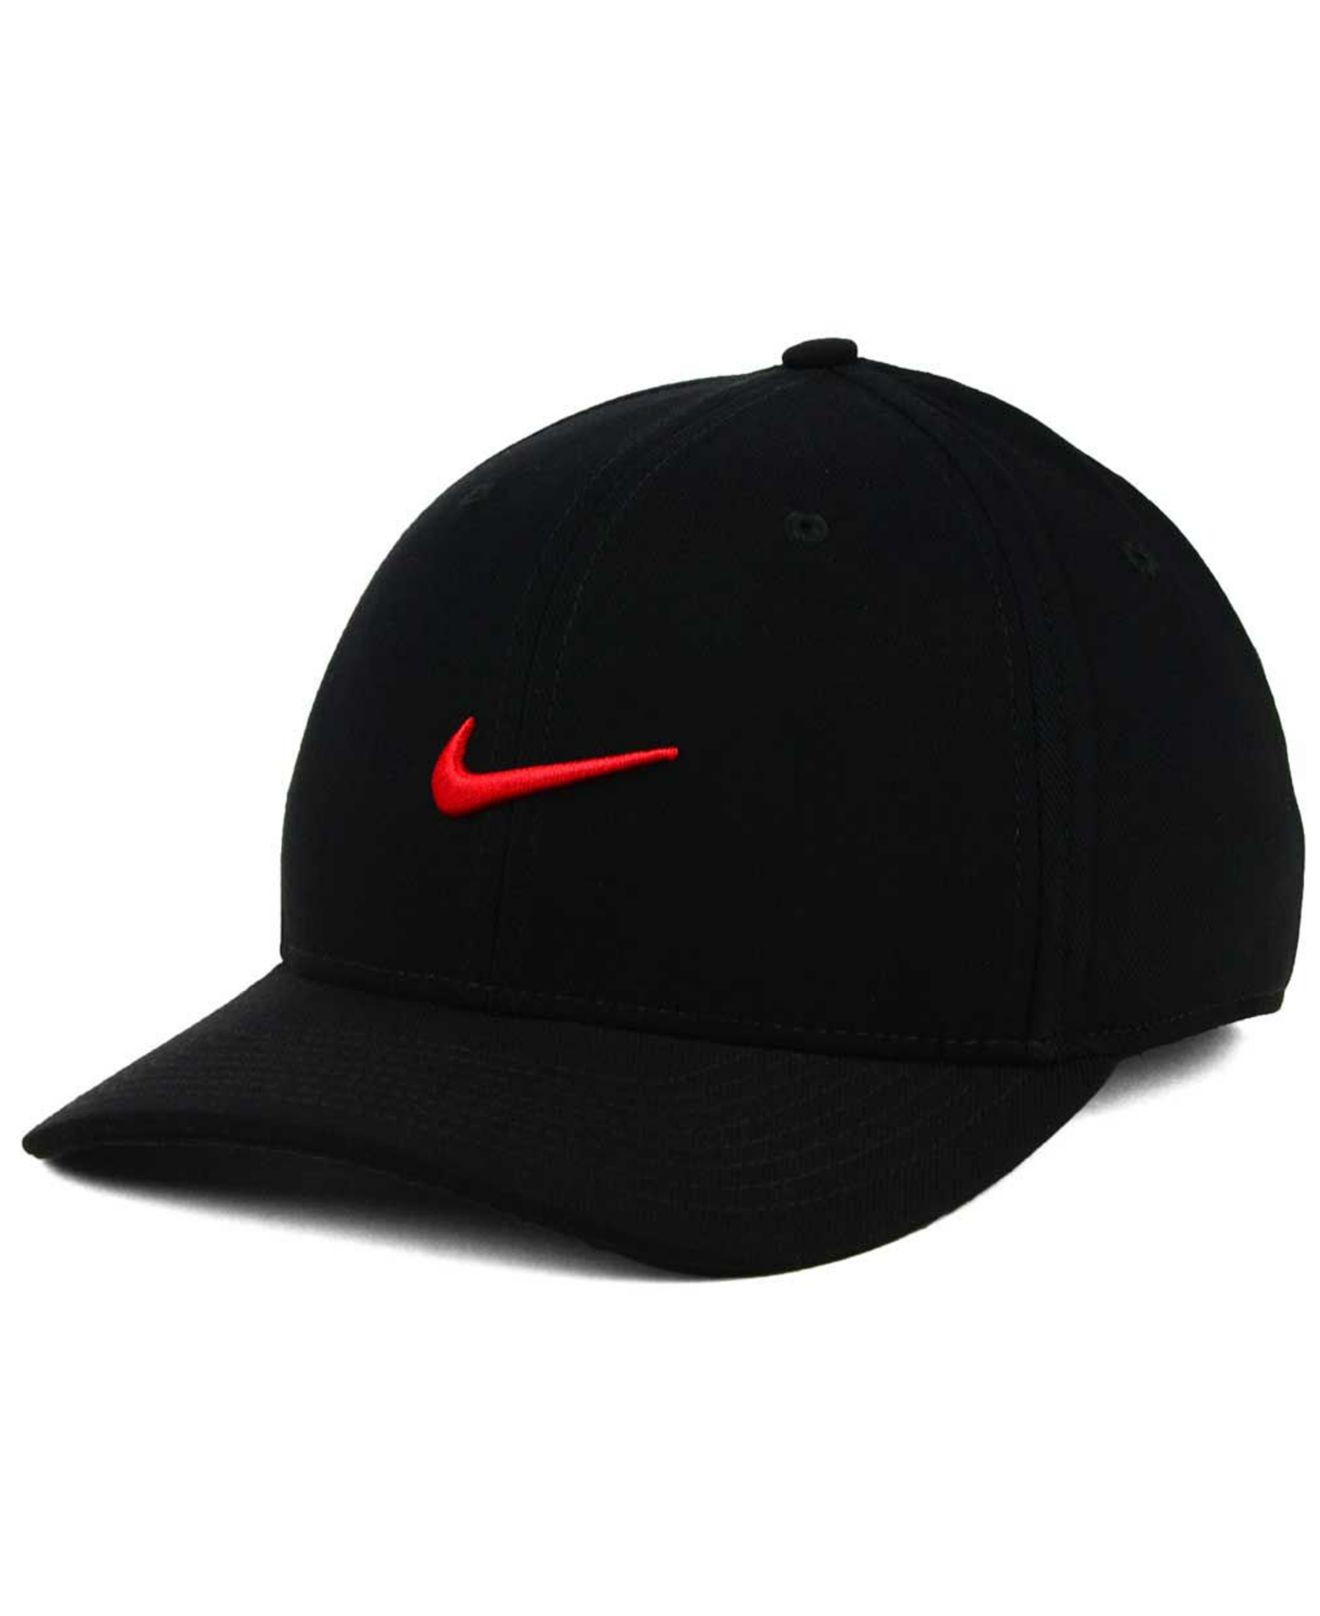 Nike Synthetic Classic Swoosh Flex Cap in Black/Red (Black) for Men - Lyst